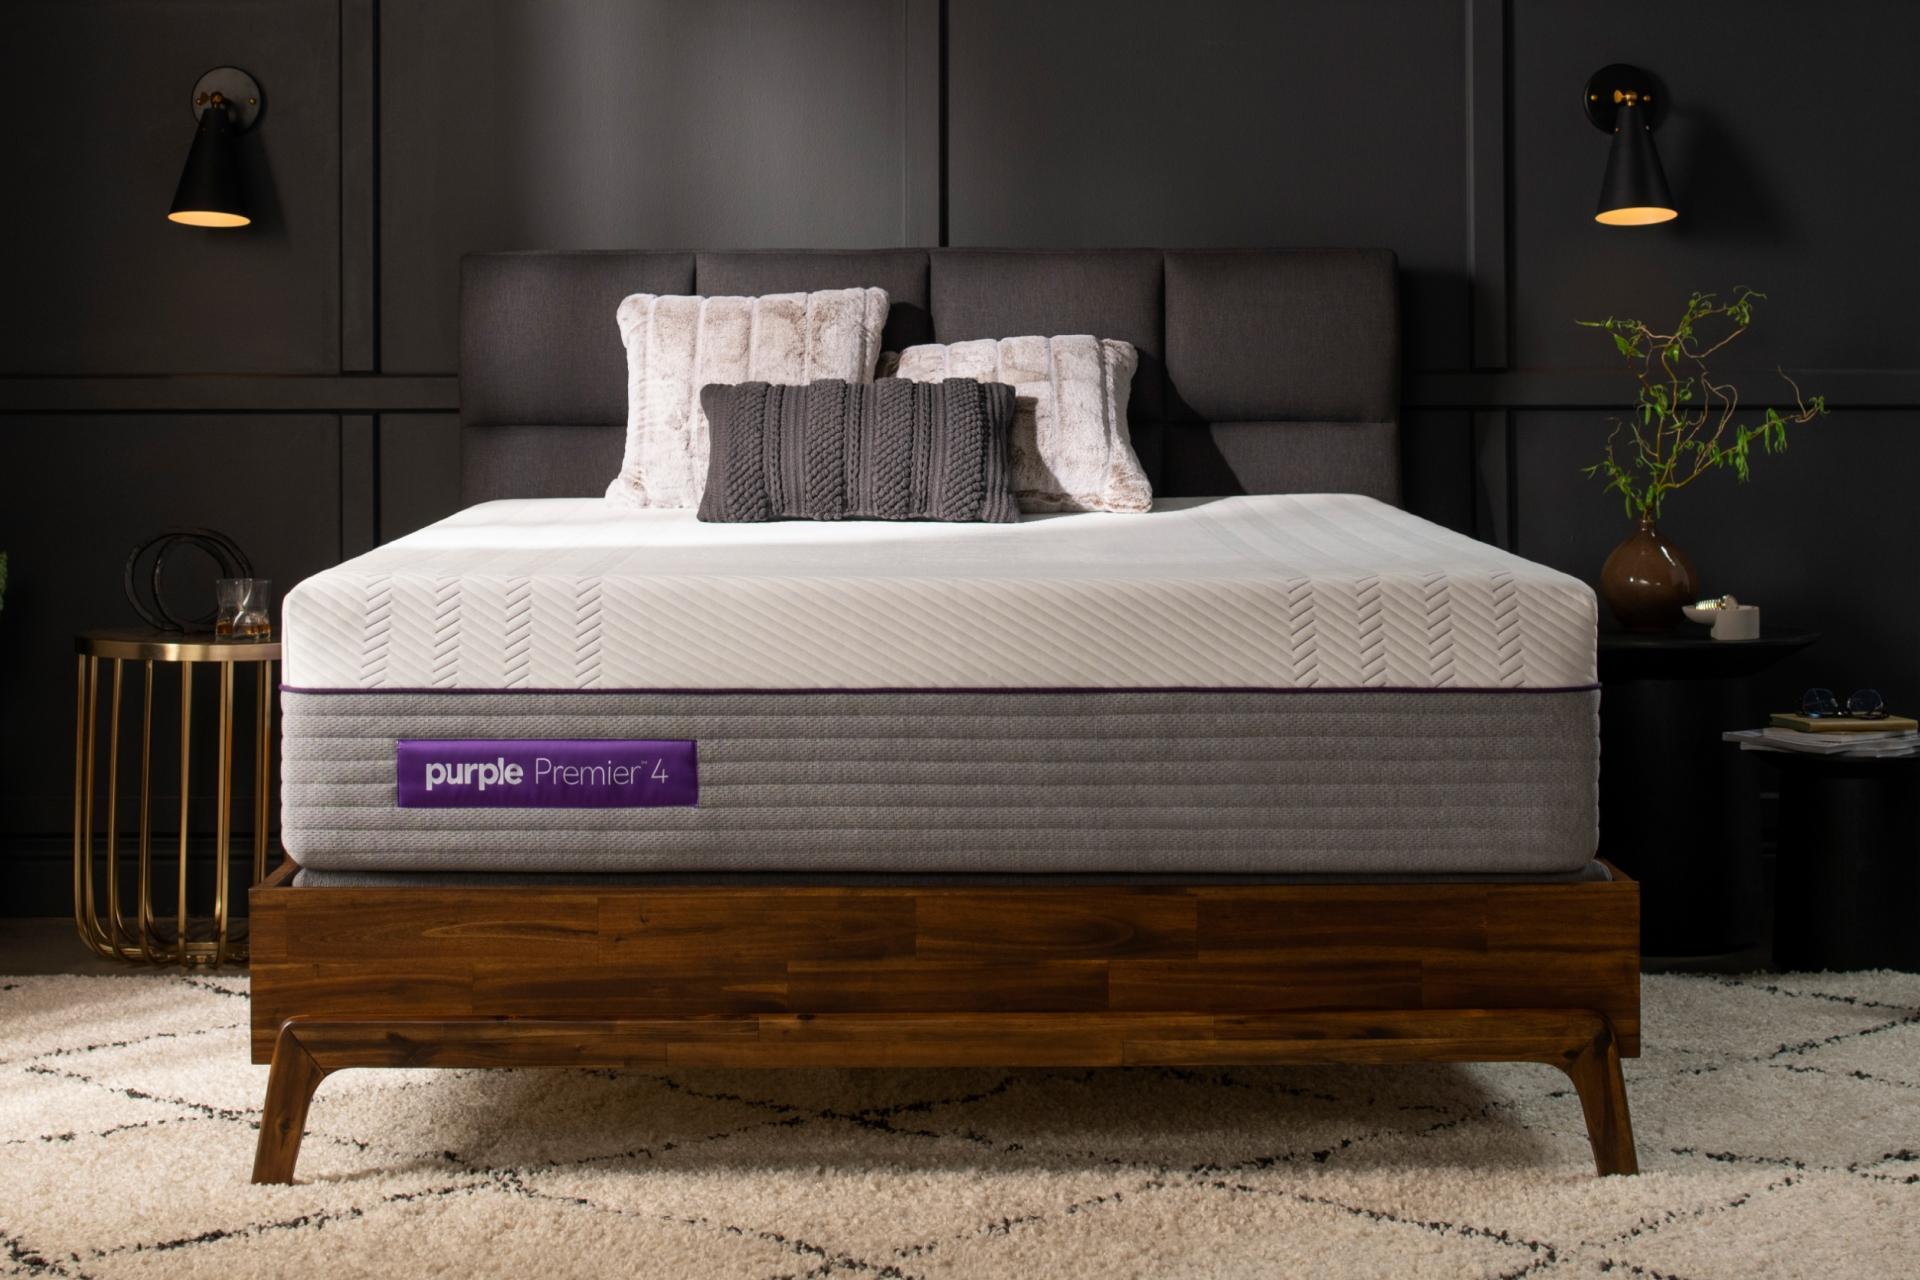 purple 4 mattress frame in bed